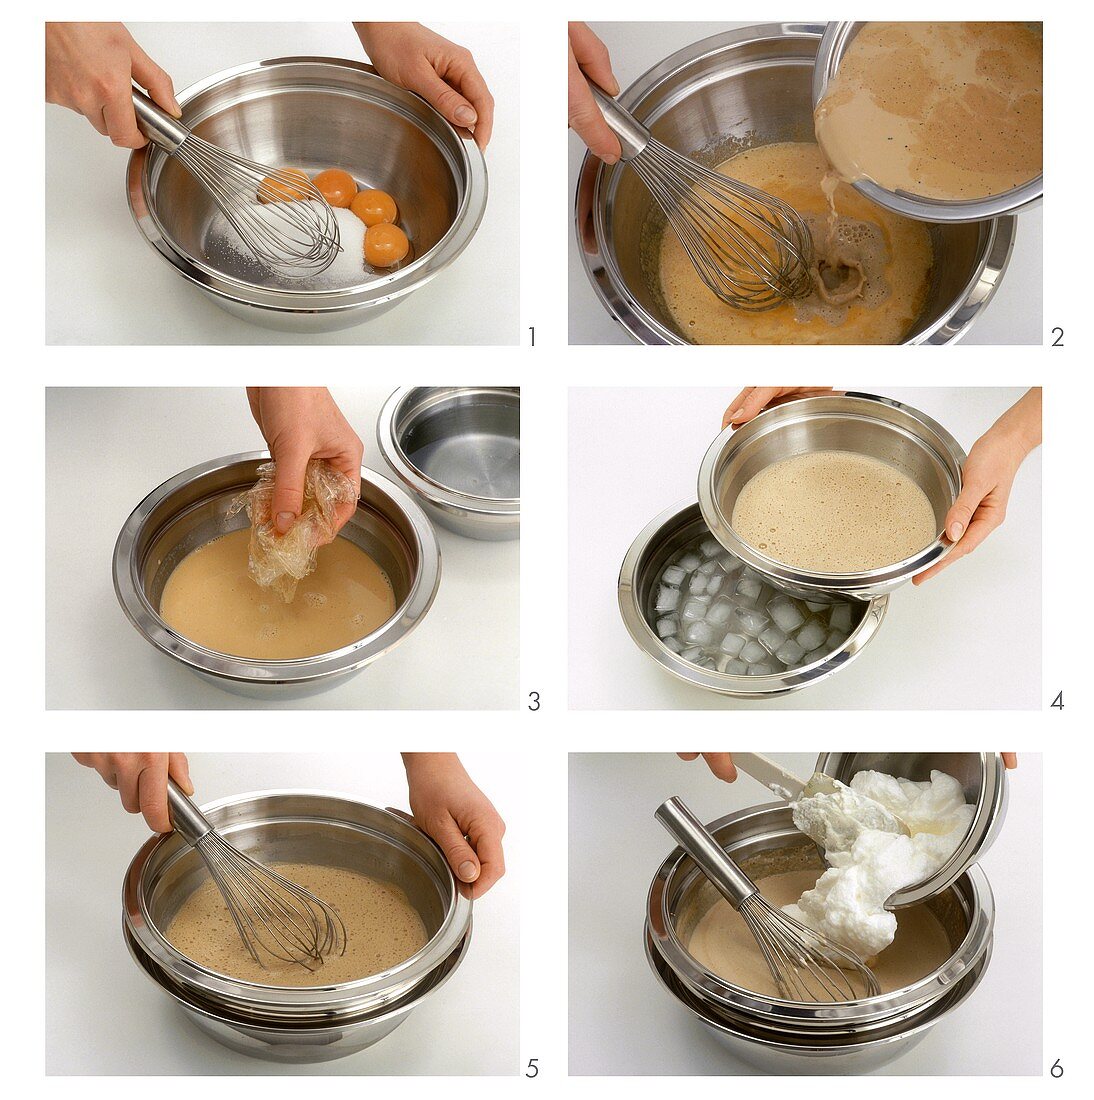 Making mocha cream